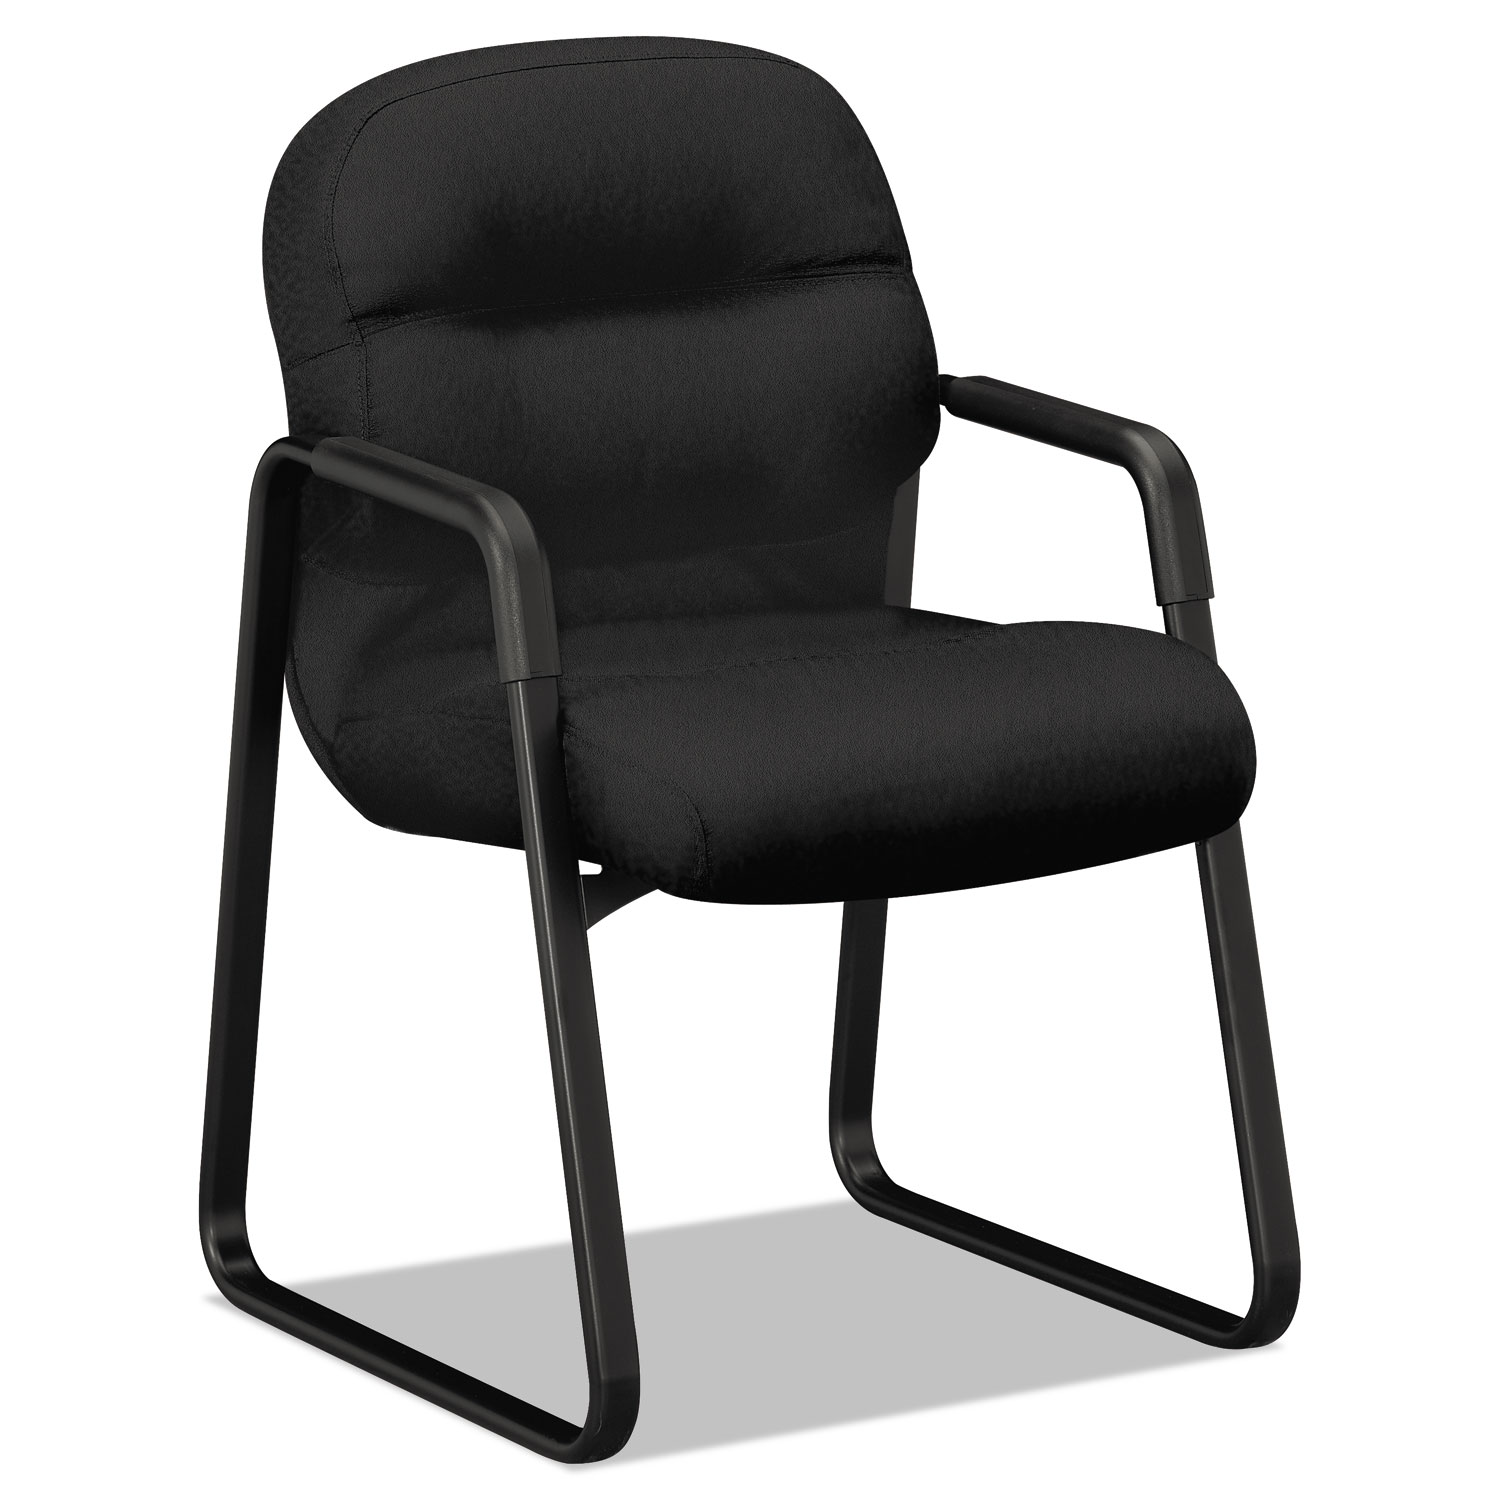  HON H2093.CU10.T Pillow-Soft 2090 Series Guest Arm Chair, 23.25 x 28 x 36, Black Seat/Black Back, Black Base (HON2093CU10T) 